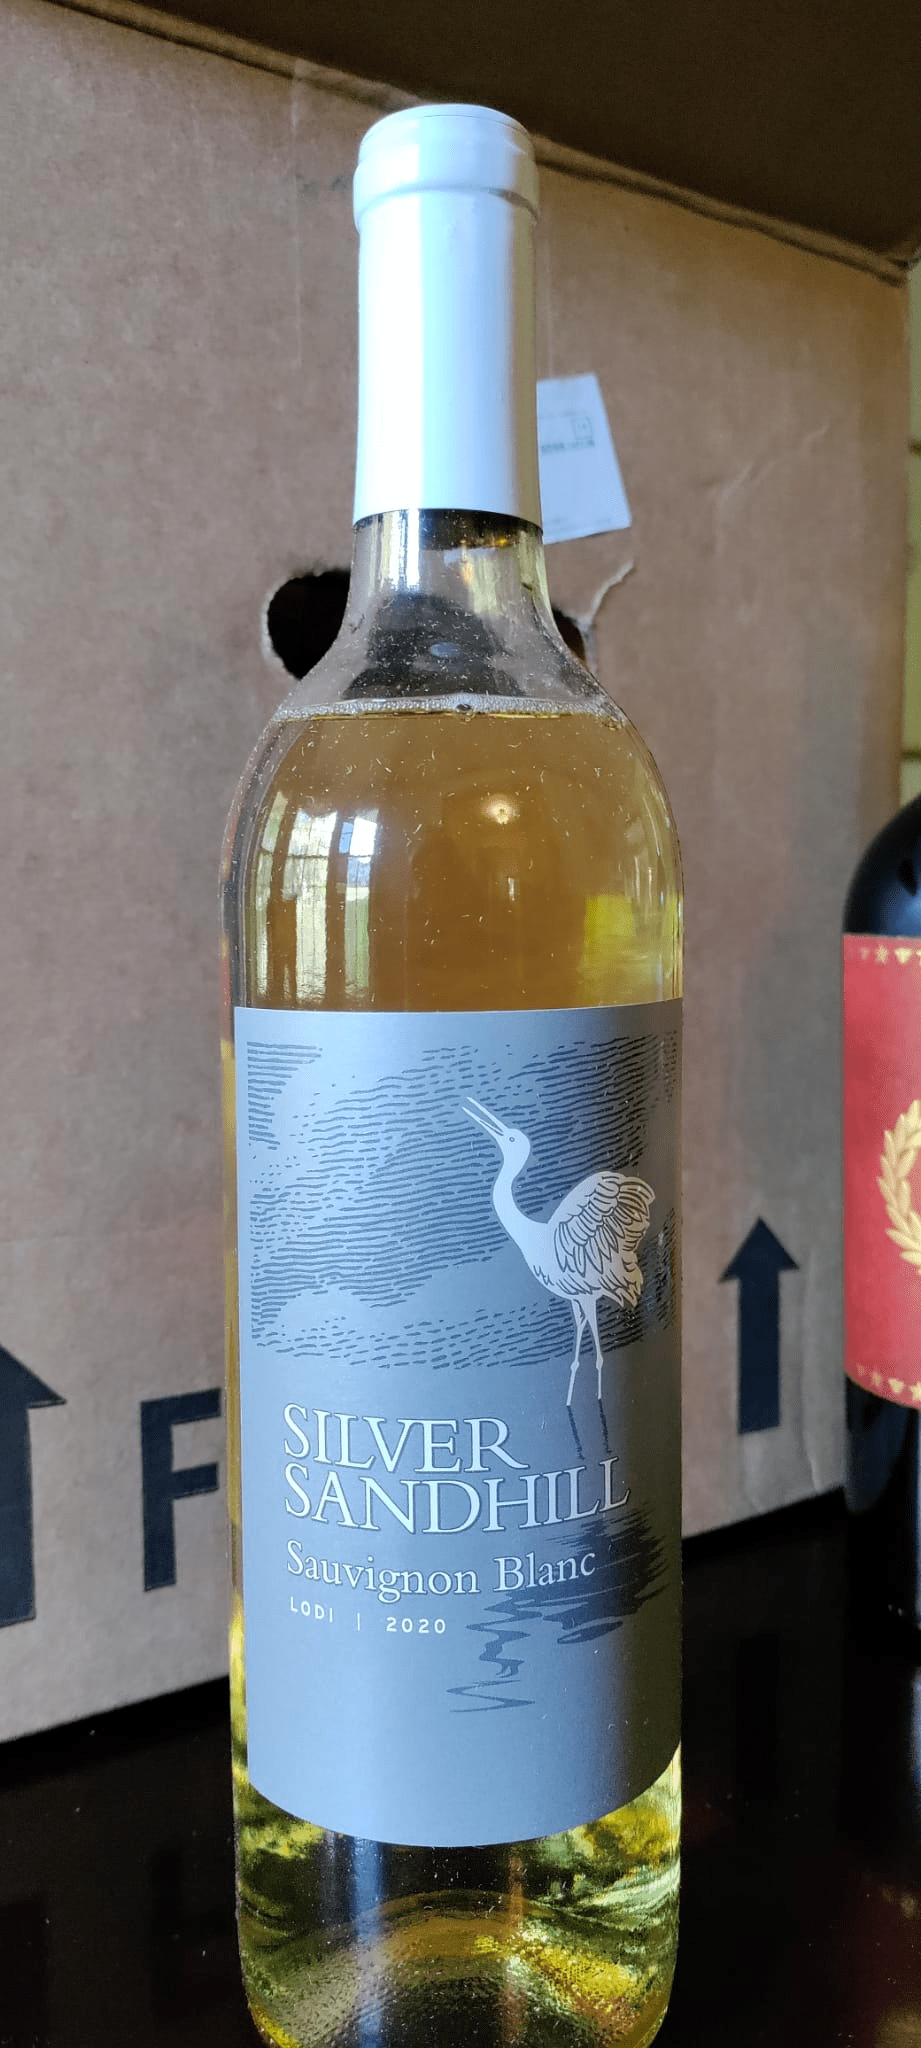 Bottle of Silver Sandhill, Sauvignon Blanc.